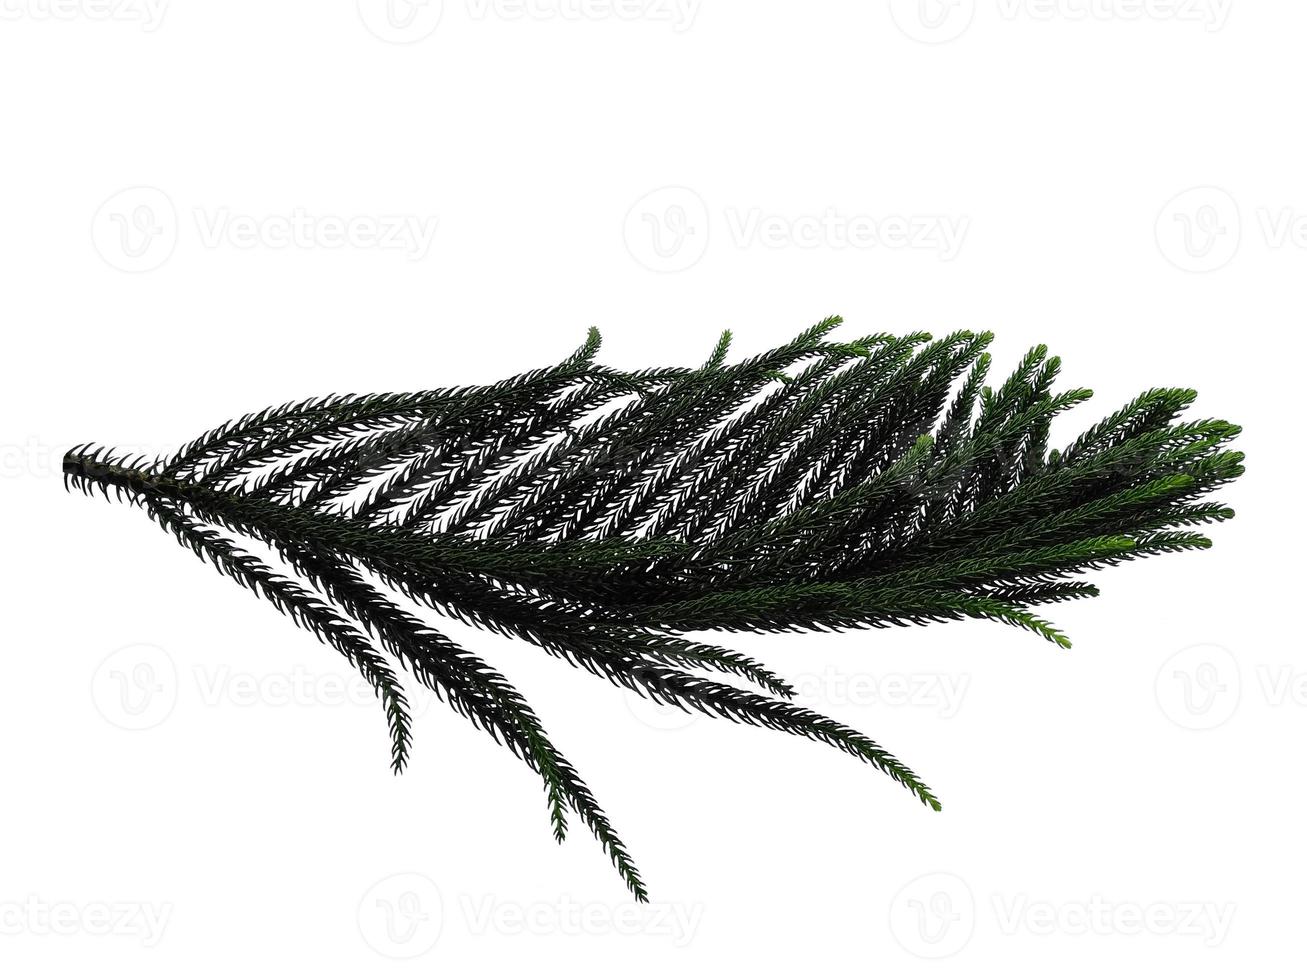 Hoop pine leaves or norfolk island pine leaf on white background photo